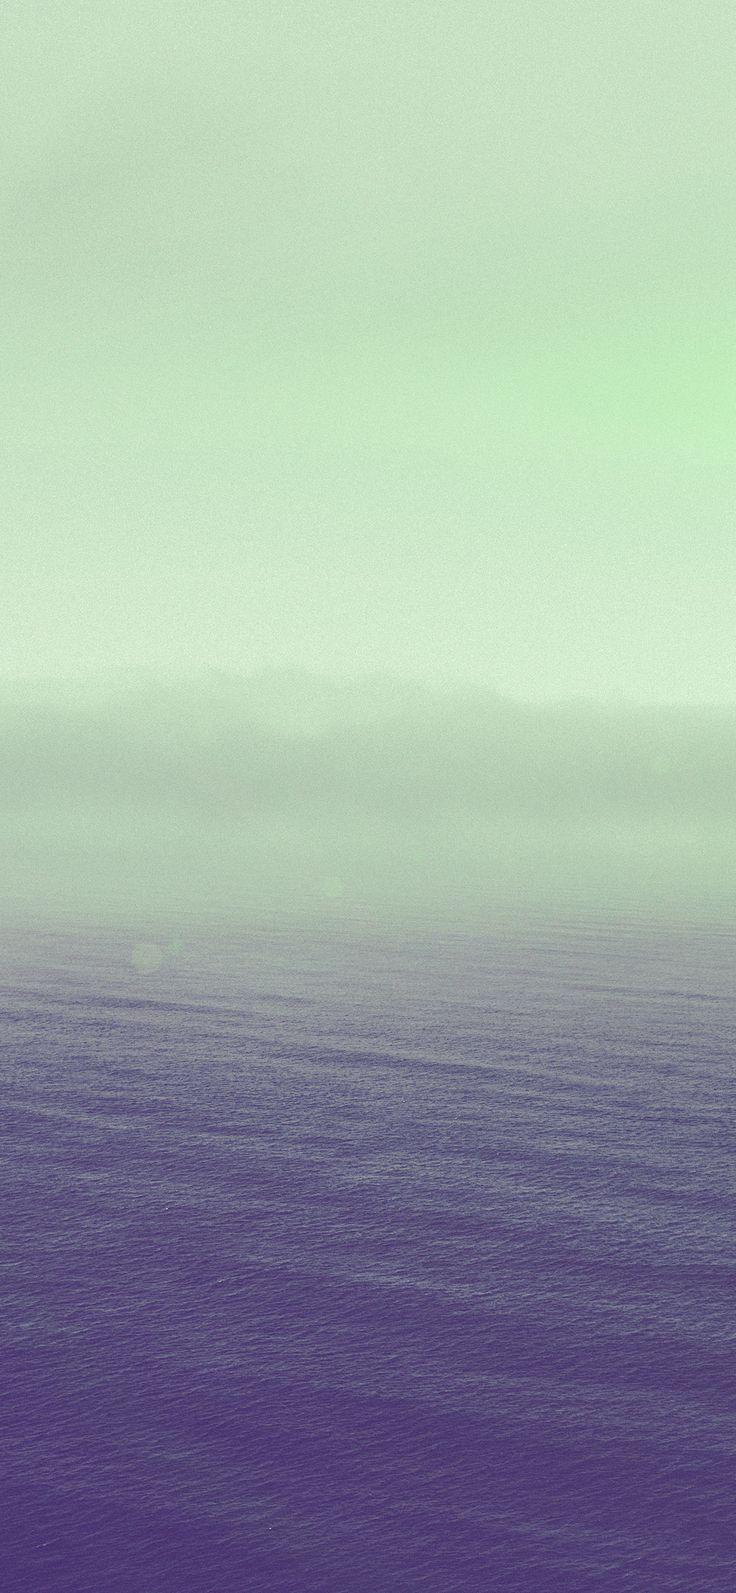 iPhone X wallpaper, sea wave taylor leopold green